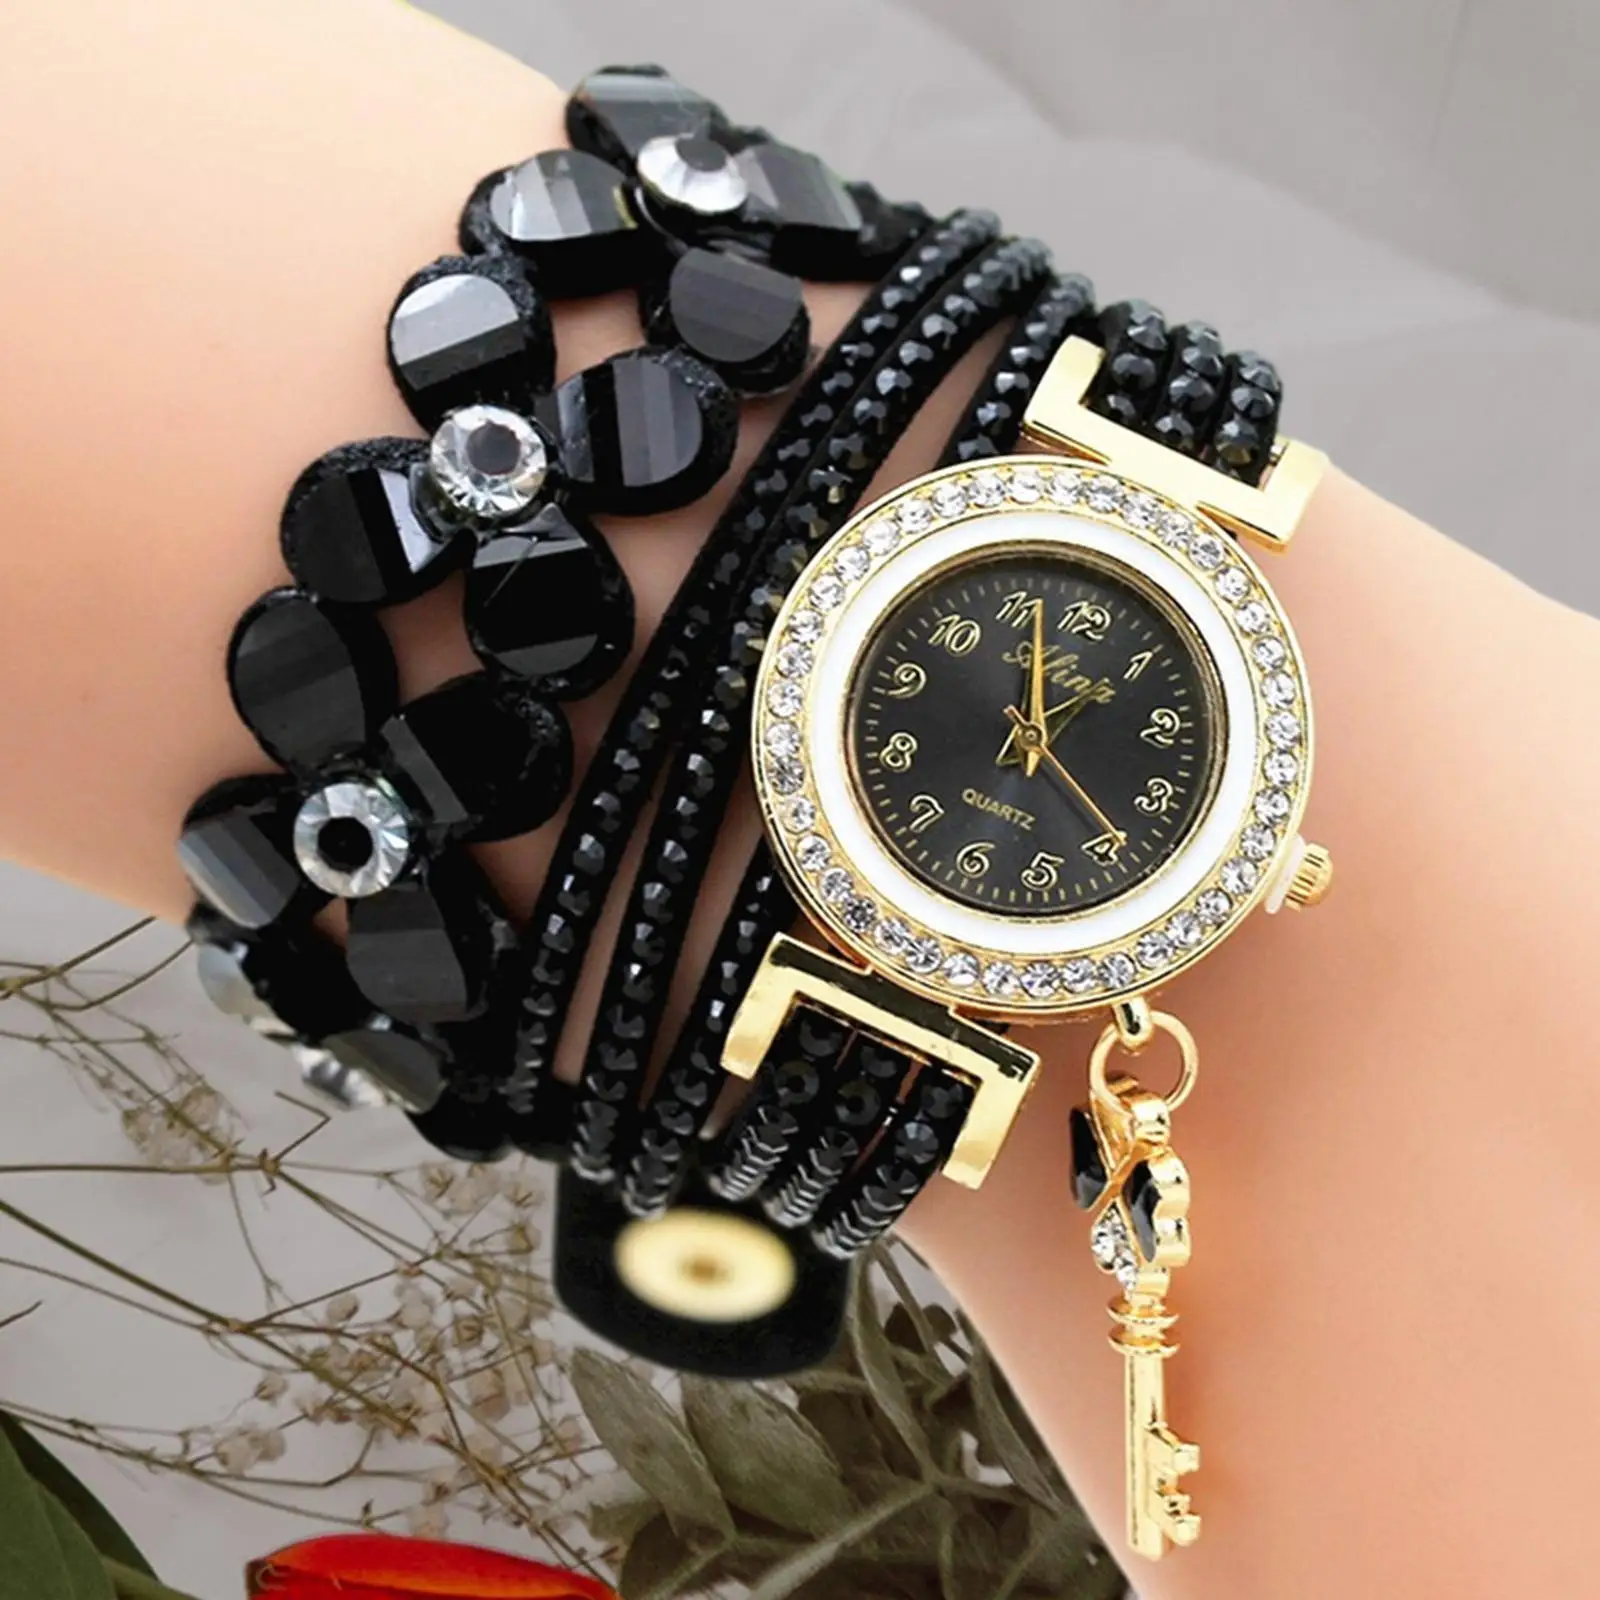 Bracelet Watch Durable Girls Women Versatile Casual Time Display Wristwatch for Hiking Travel Outdoor Activities Fishing Camping